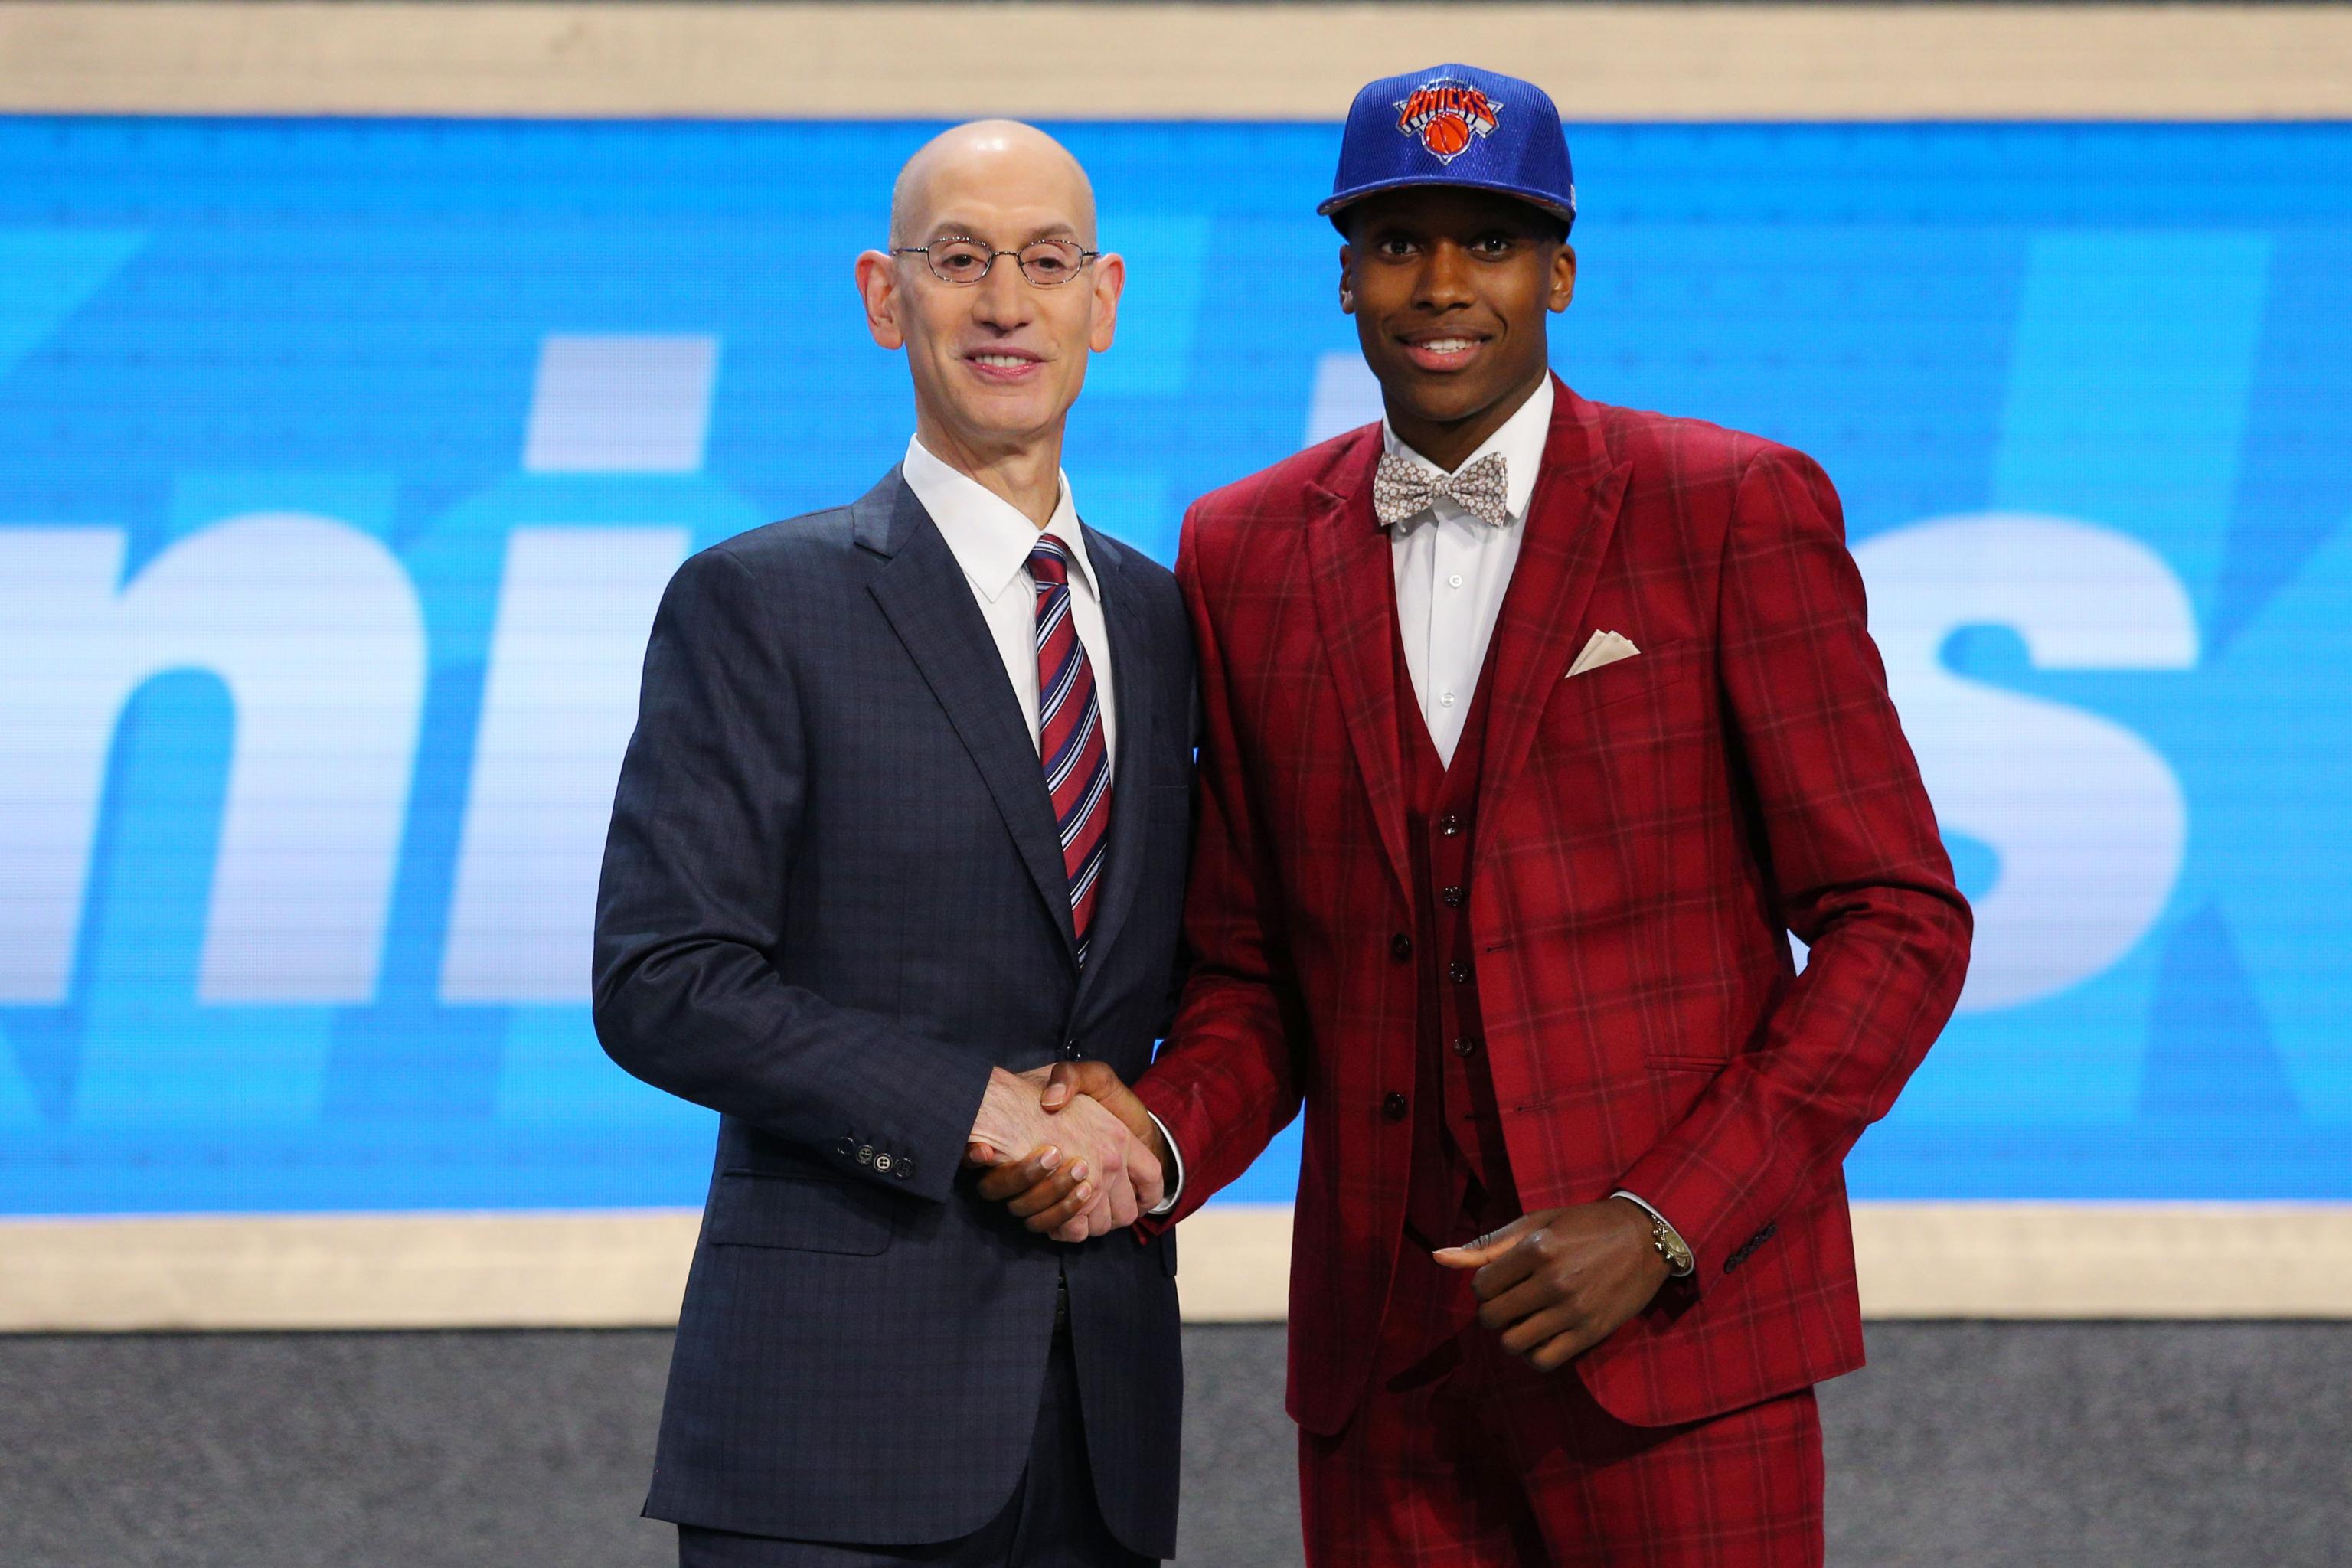 Frank Ntilikina looks 'fantastic' in surprise return to Knicks lineup